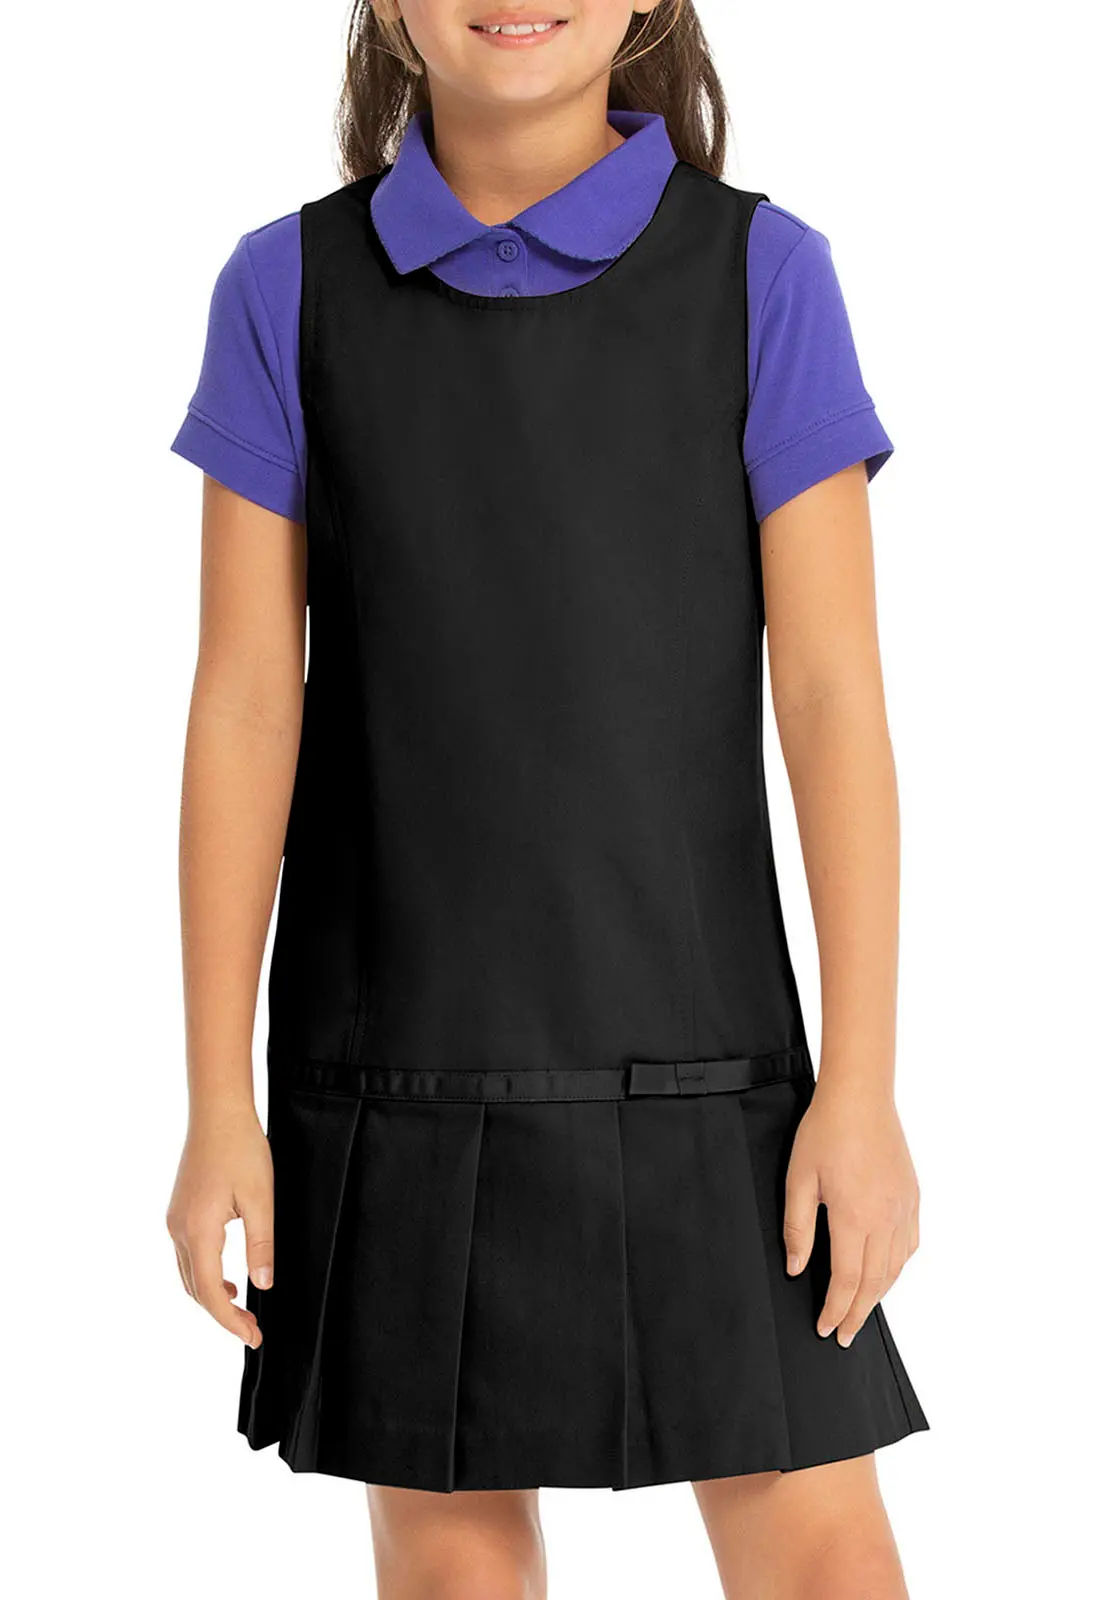 Drop Waist Jumper w/Ribbon Bow-Real School Uniforms